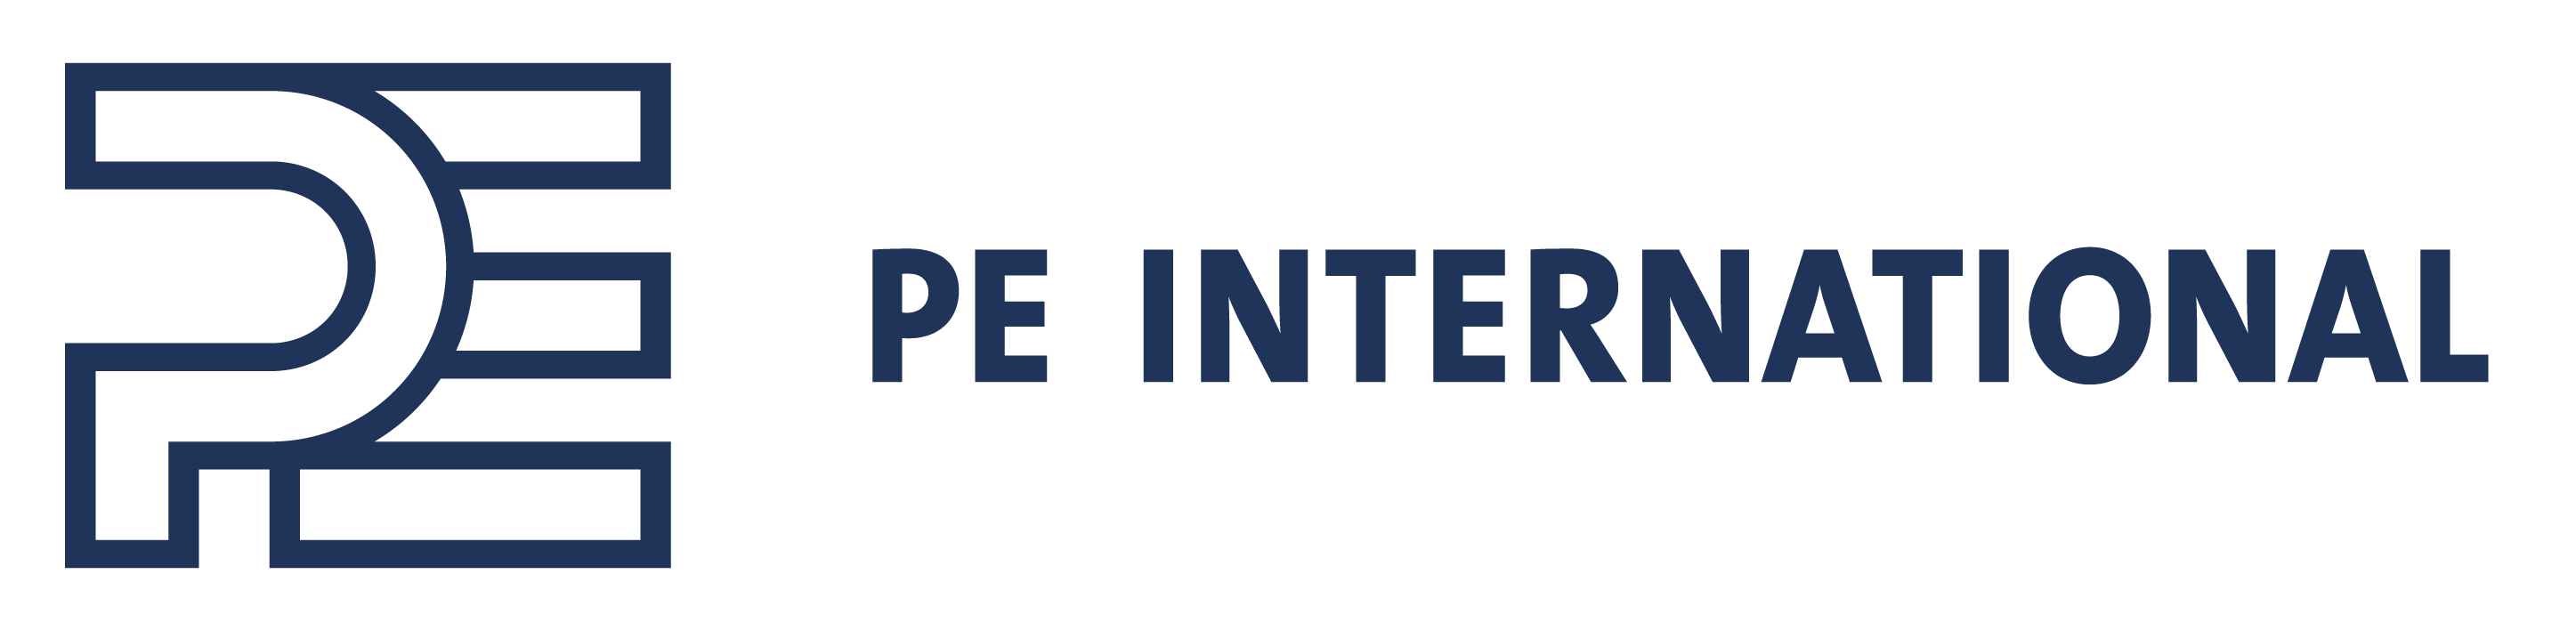 pe-international_logo